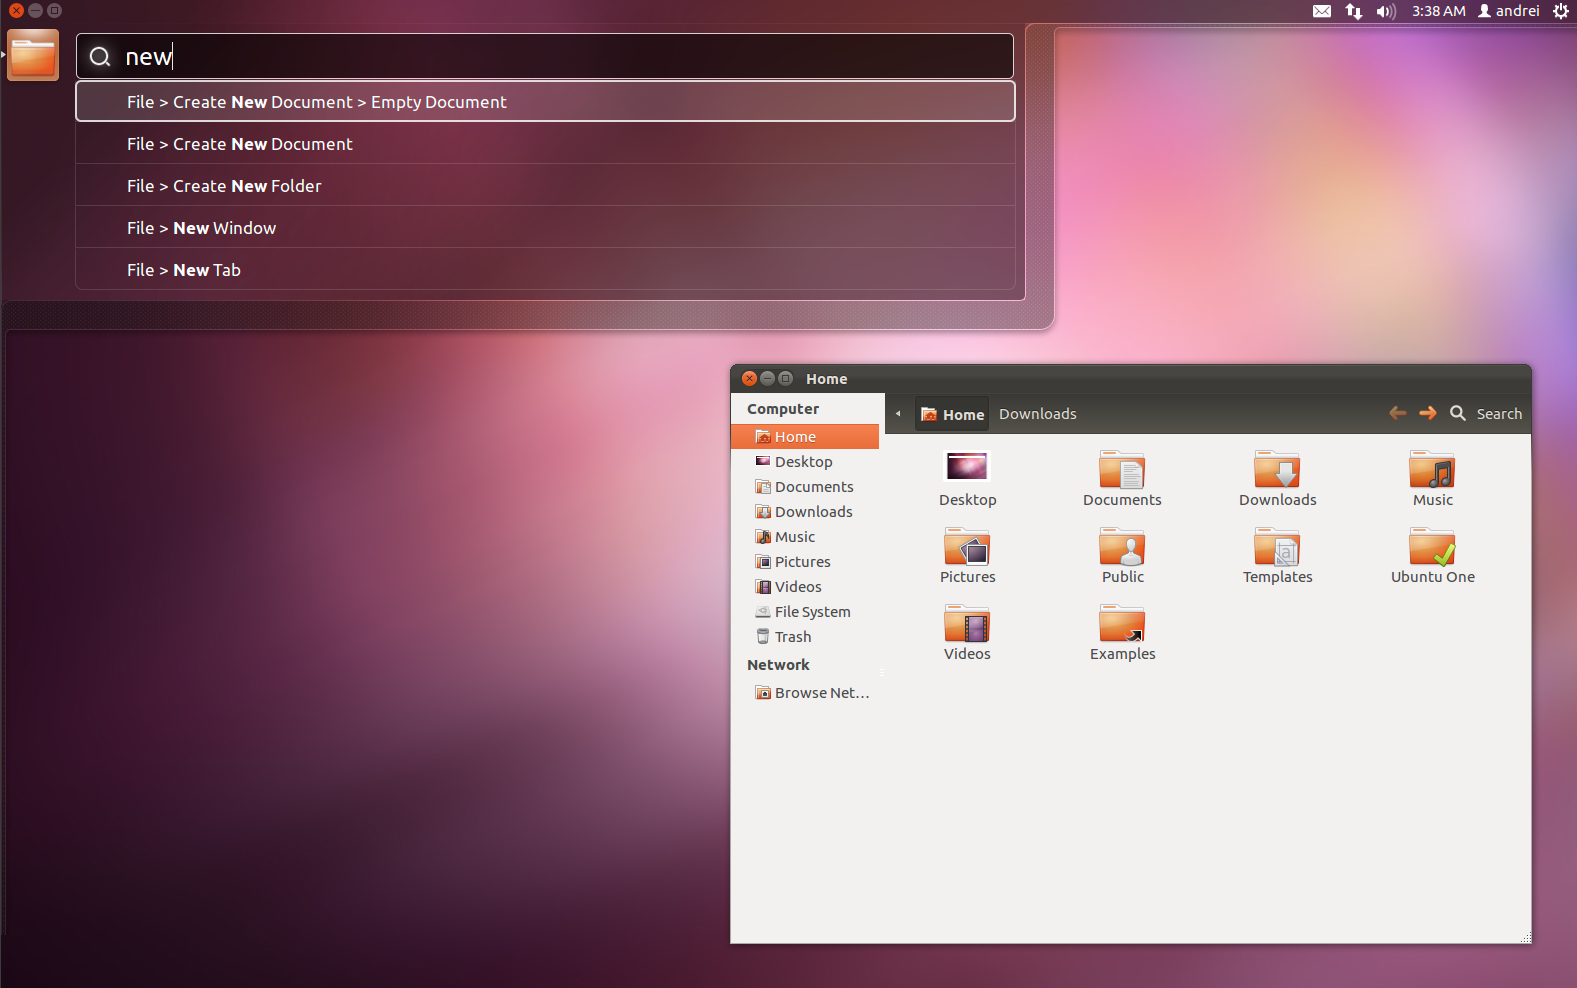 Download do Ubuntu 12.04 Beta 1